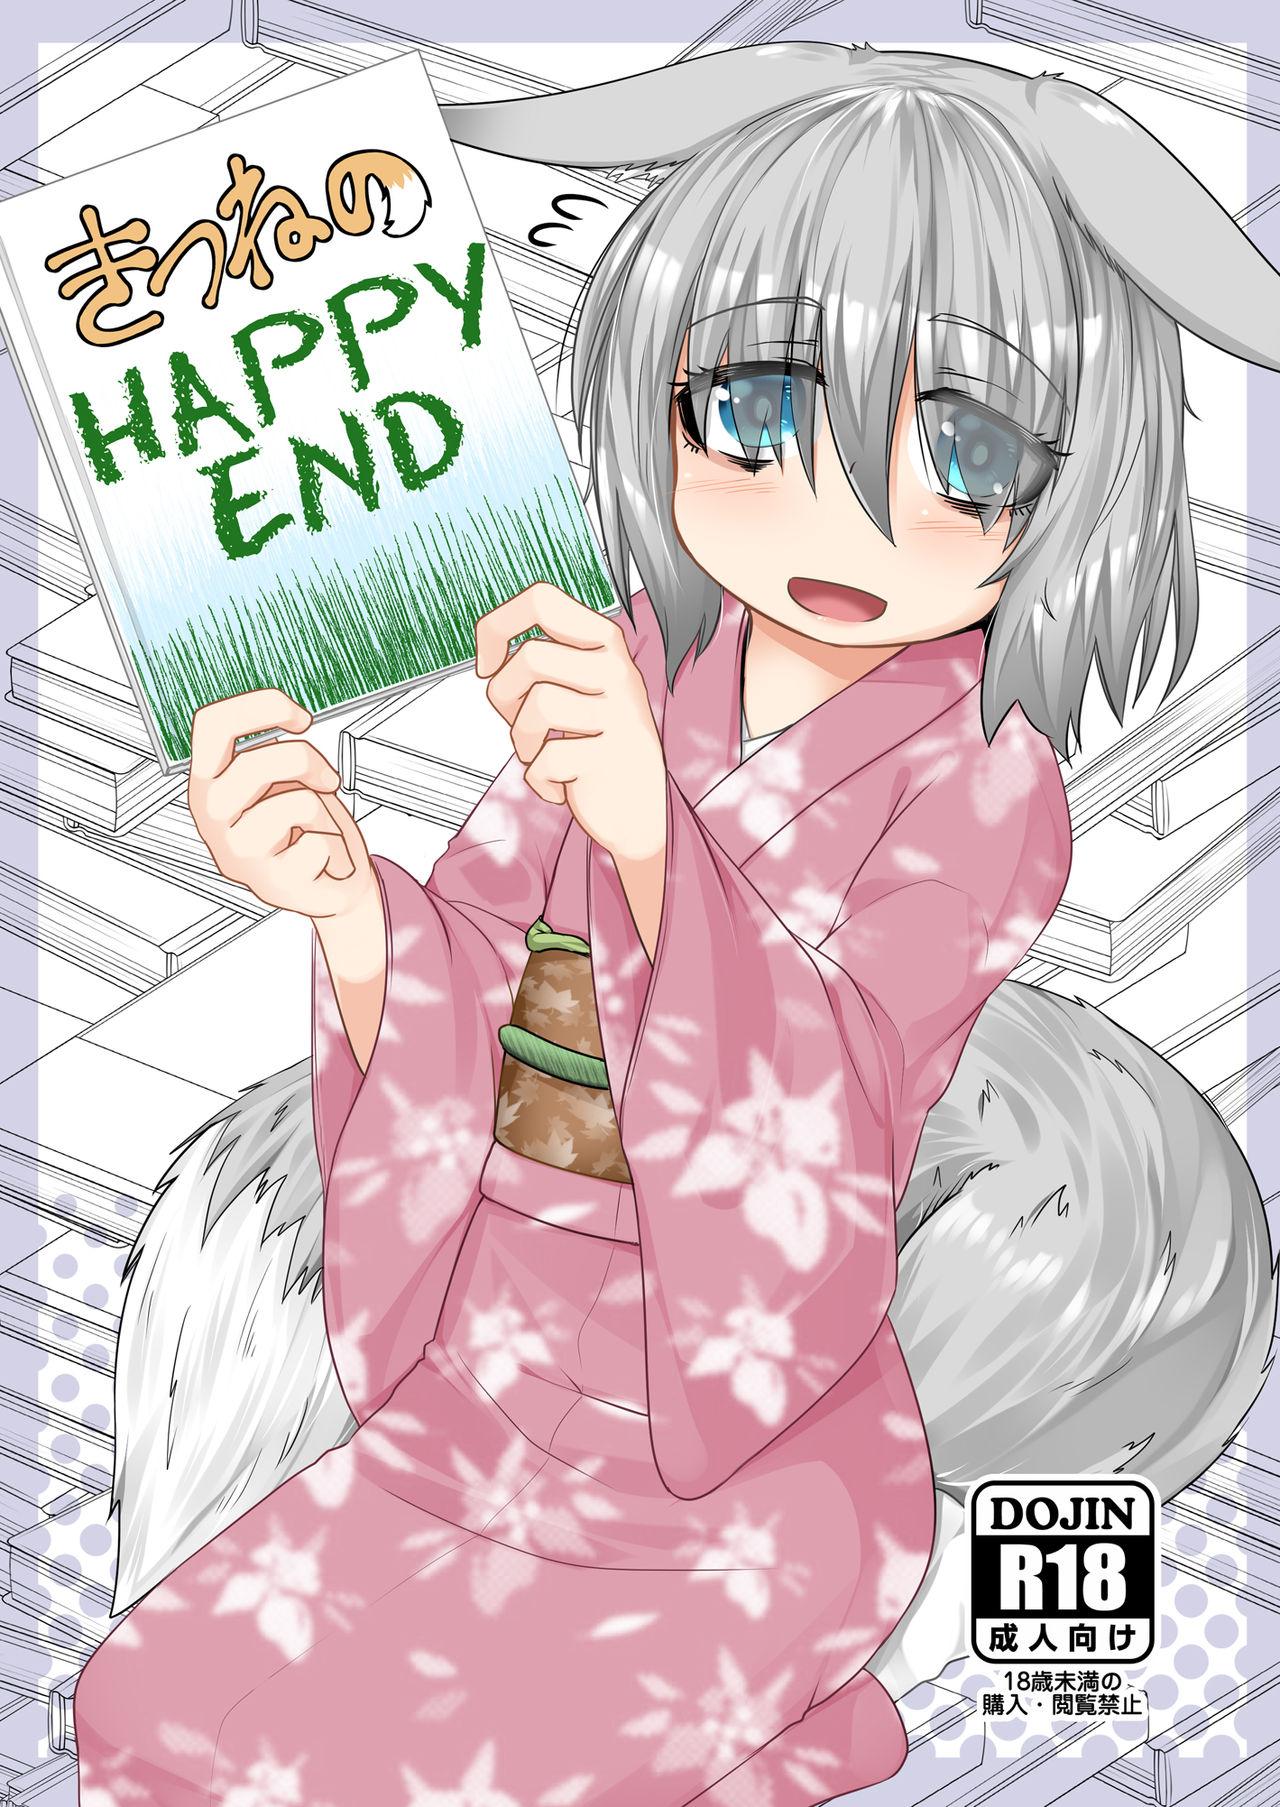 The Fox's Happy End 1